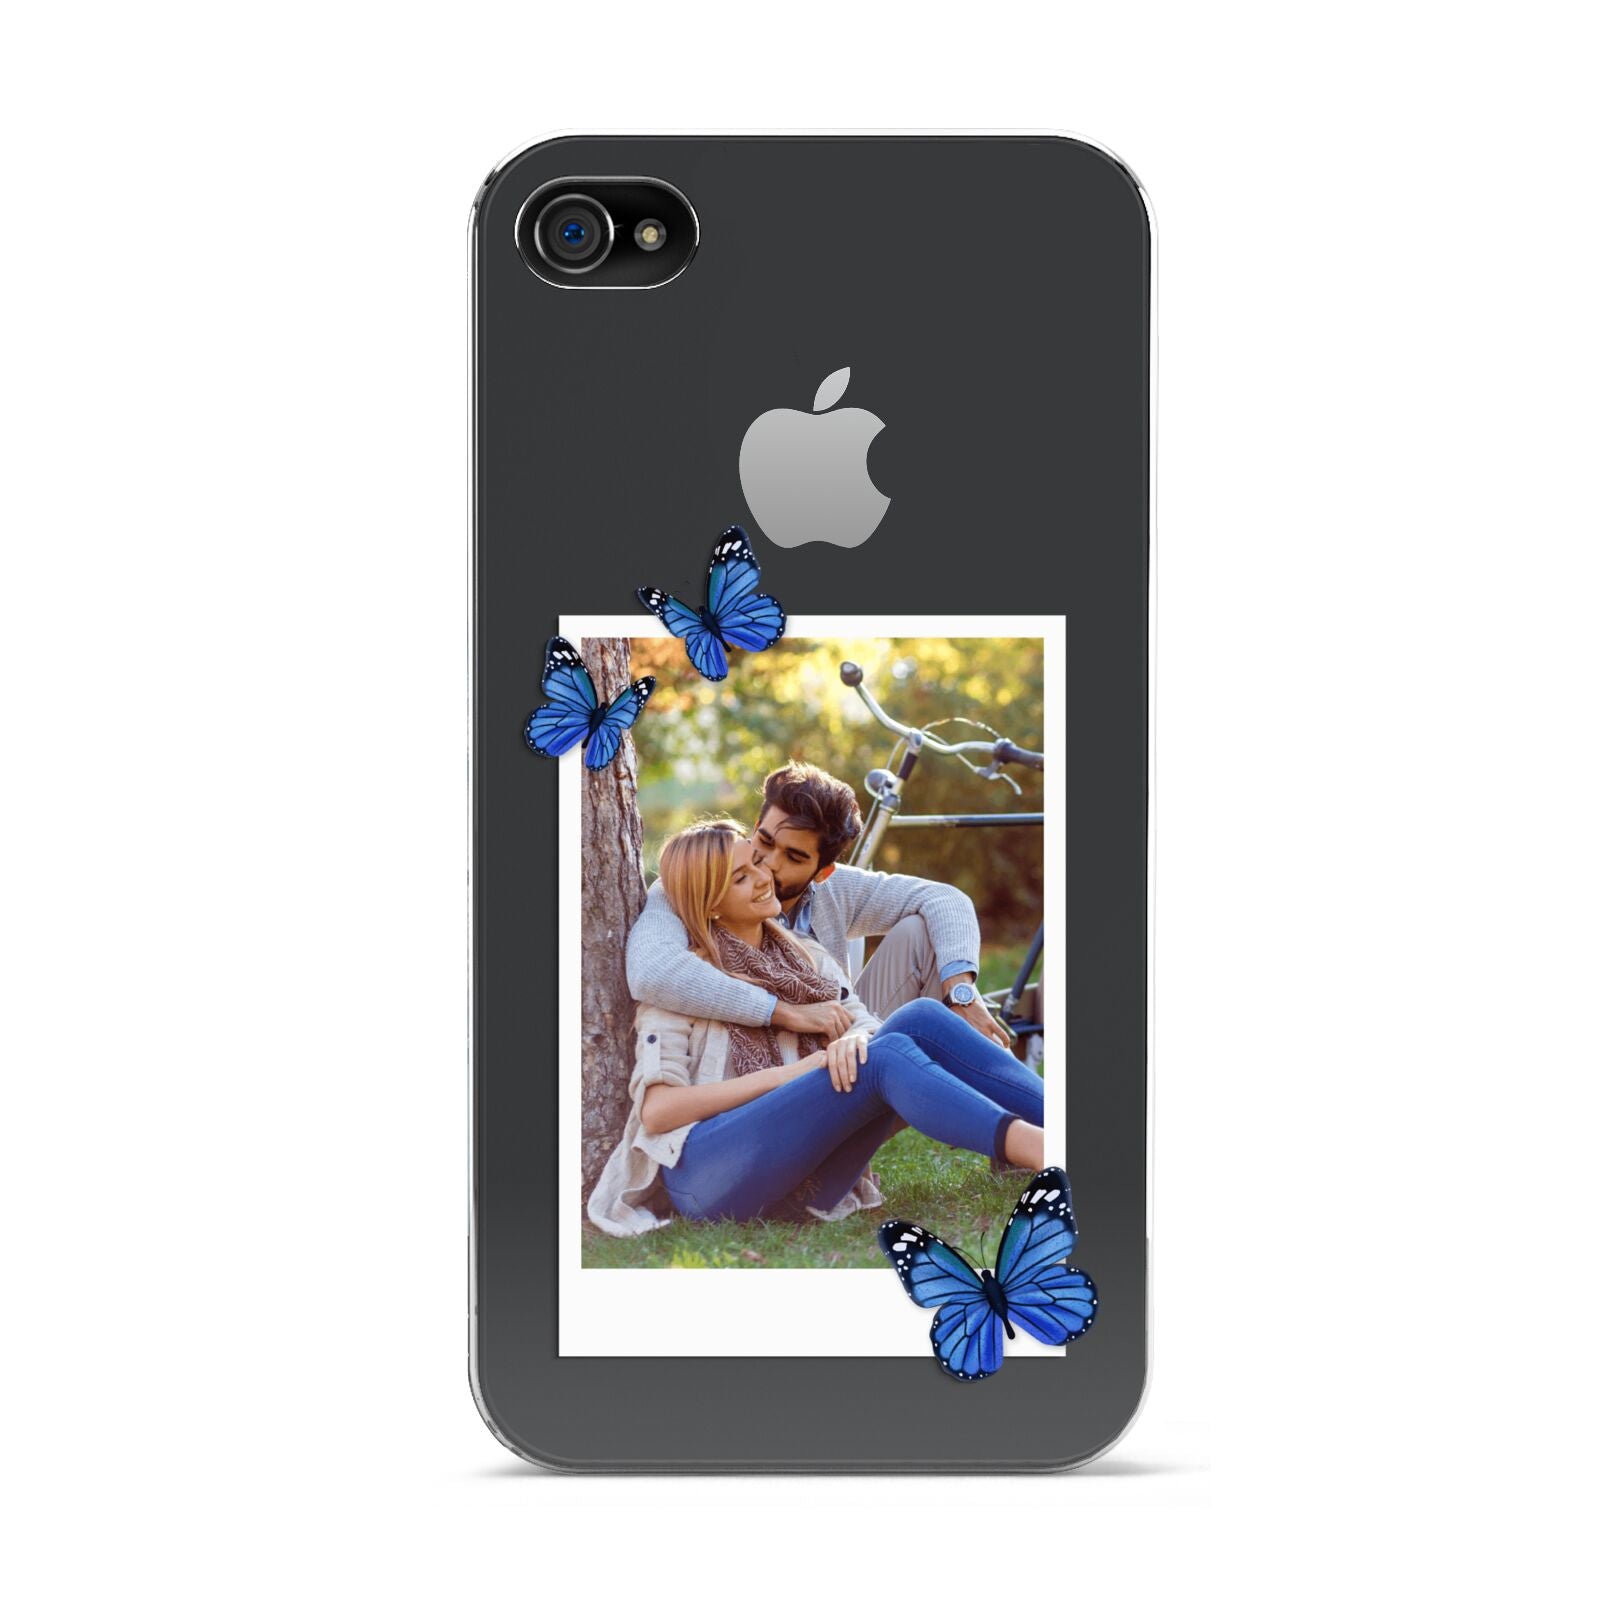 Polaroid Photo Apple iPhone 4s Case